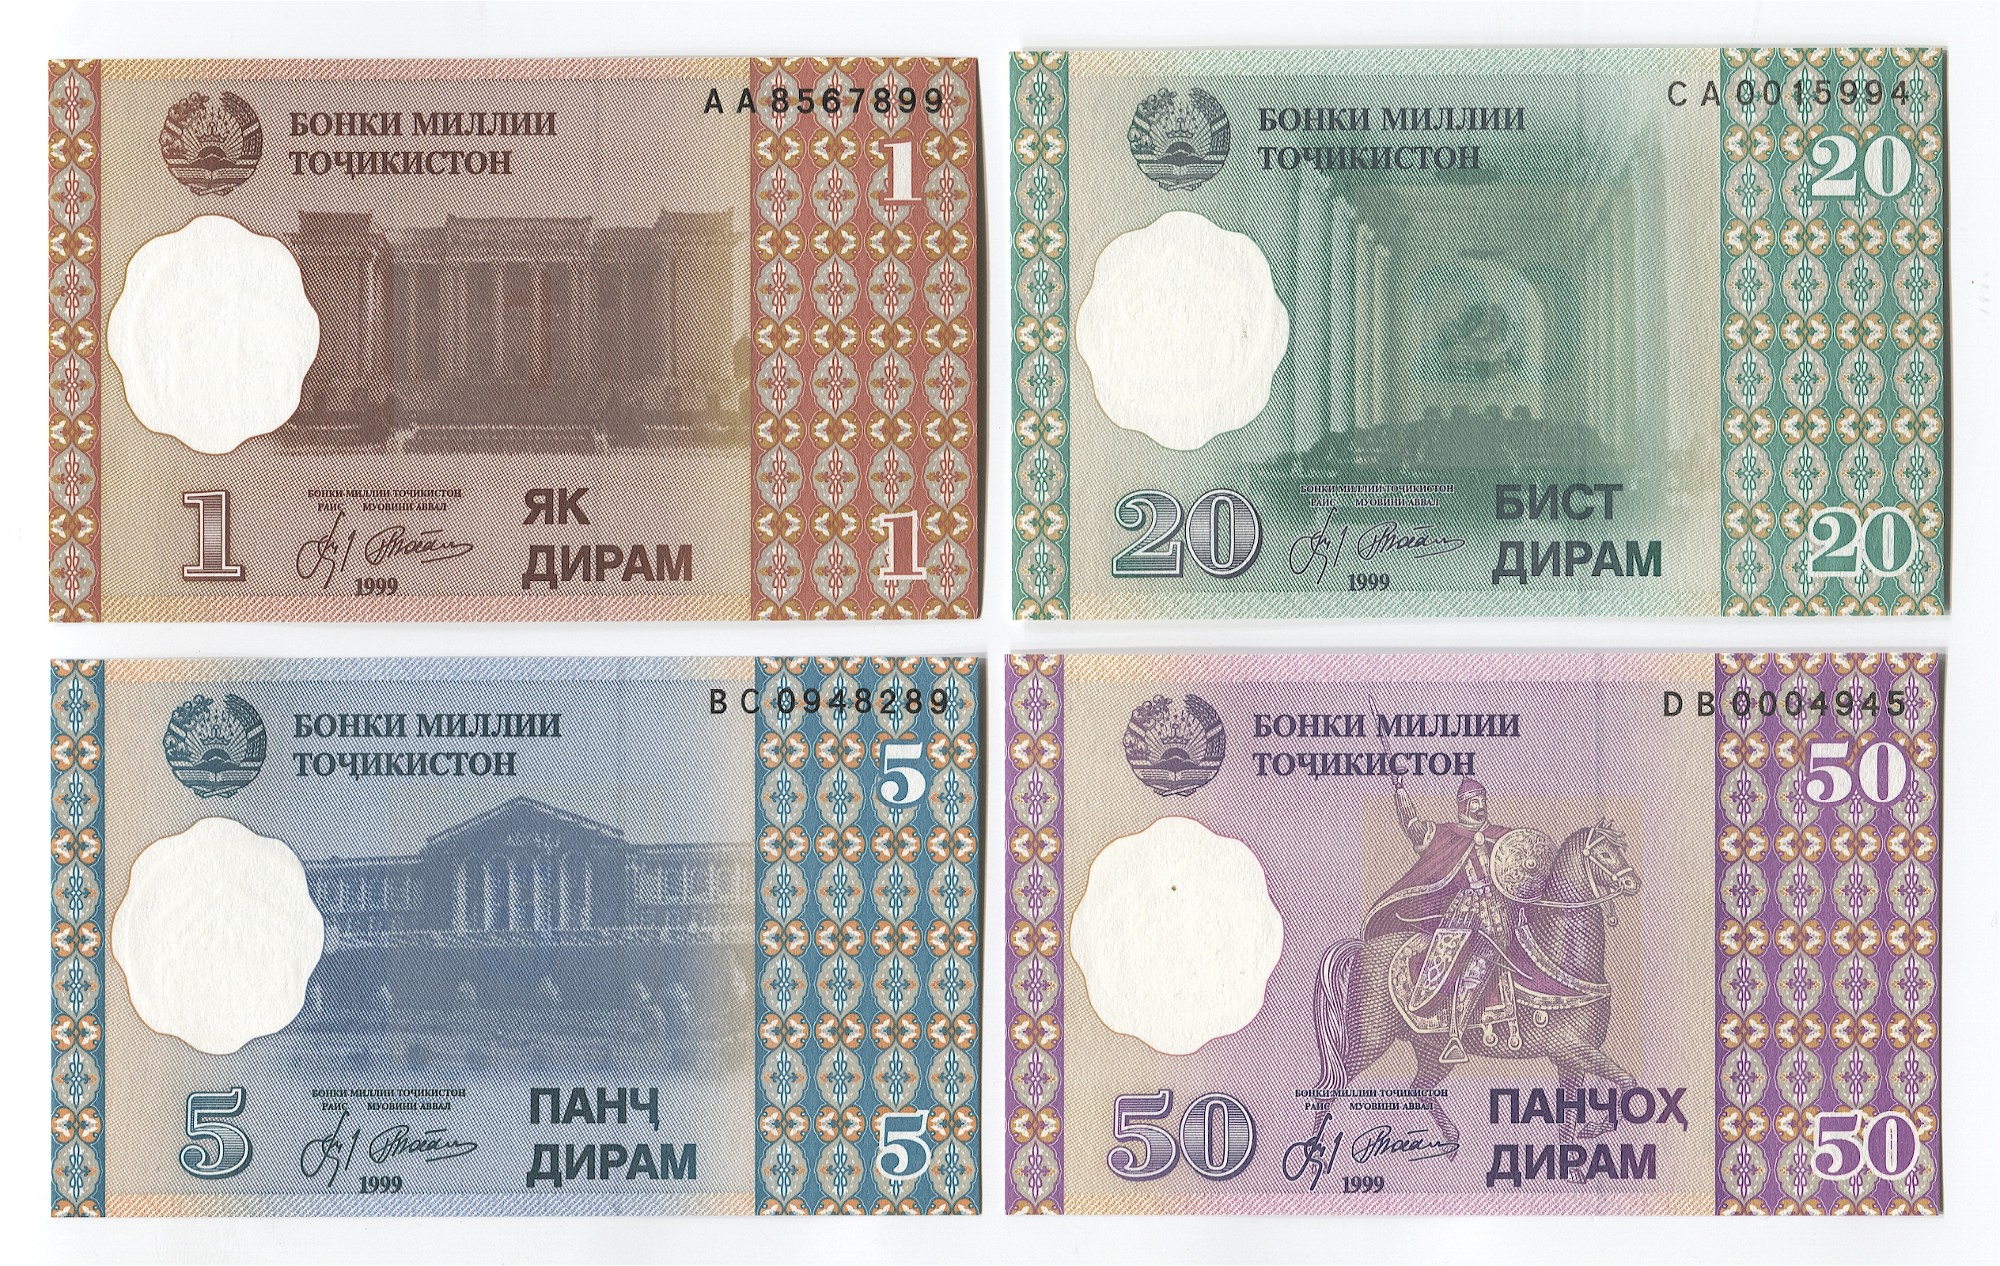 Сколько доллар сомони. 50 Дирам 1999 Таджикистана. Таджикистан 20 дирам 1999 год пресс UNC. Банкнота Таджикистан 20 дирам 1999. Купюра Таджикистан 1 дирам 1999.